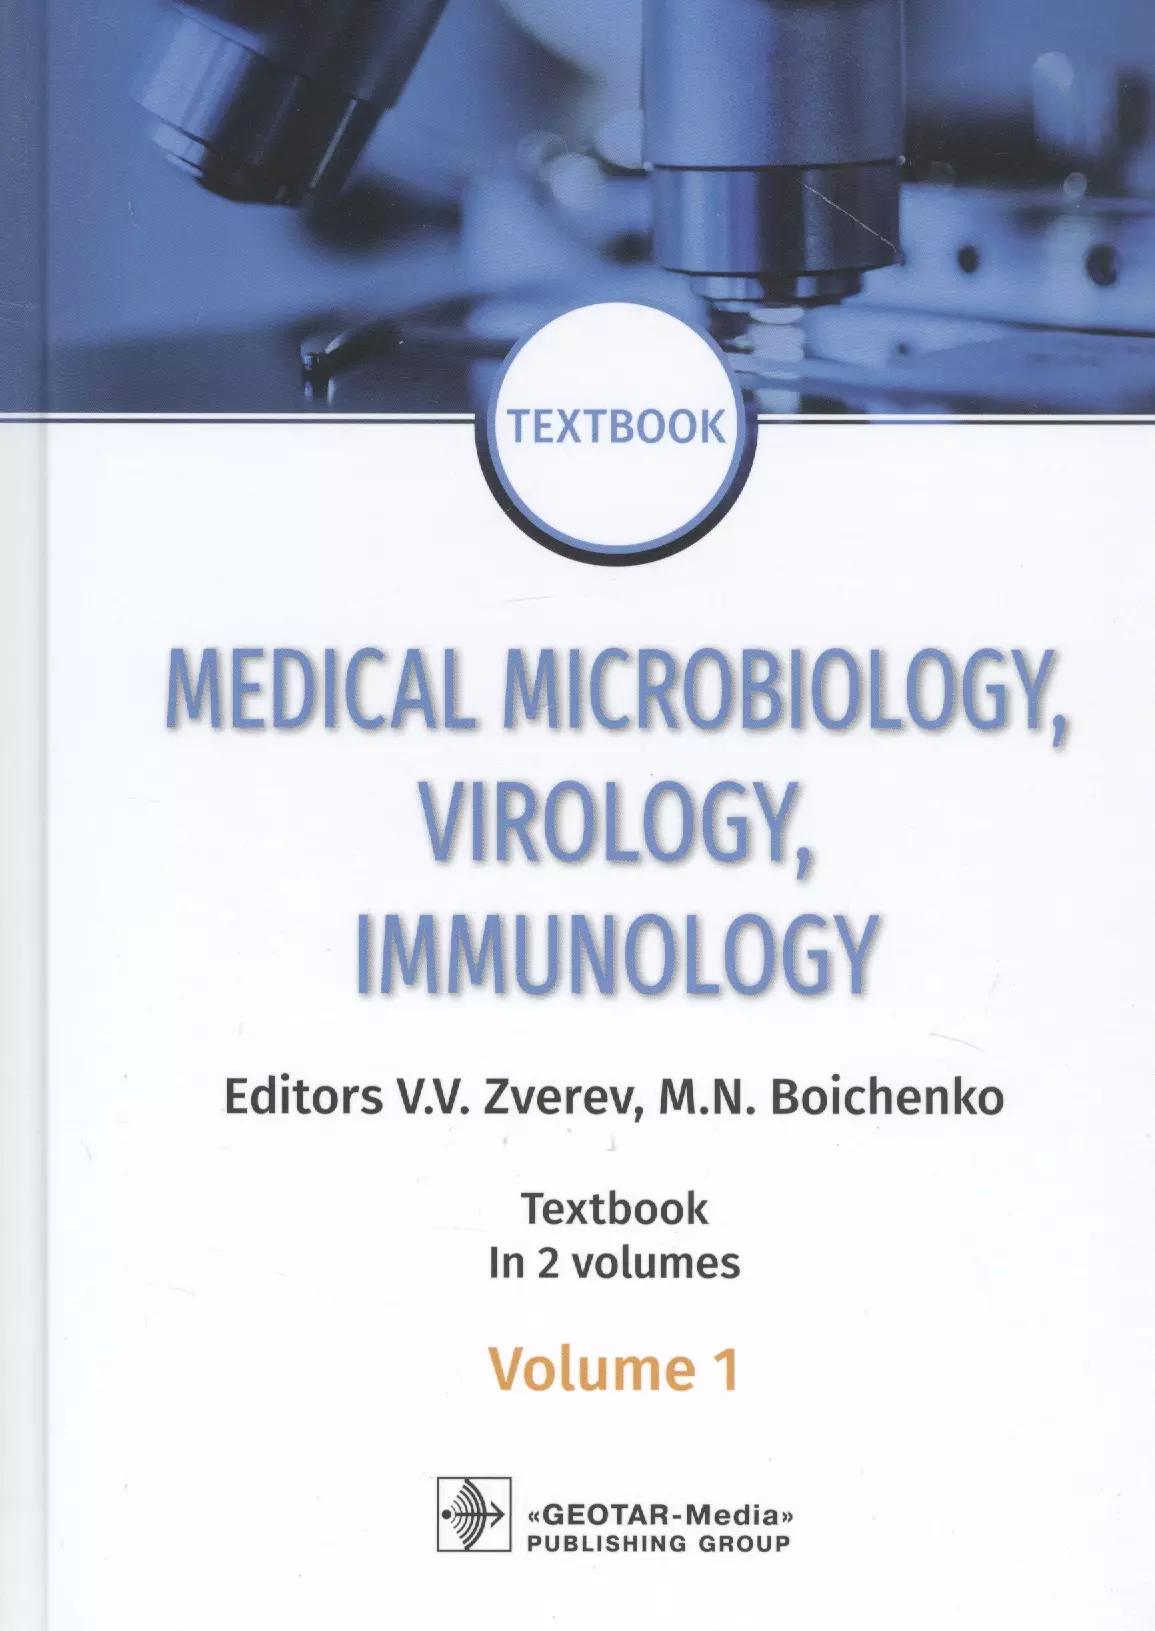 Зверев Виталий Васильевич - Medical Microbiology, Virology, Immunology. Textbook in 2 Volumes. Volume 1 (на английском языке)